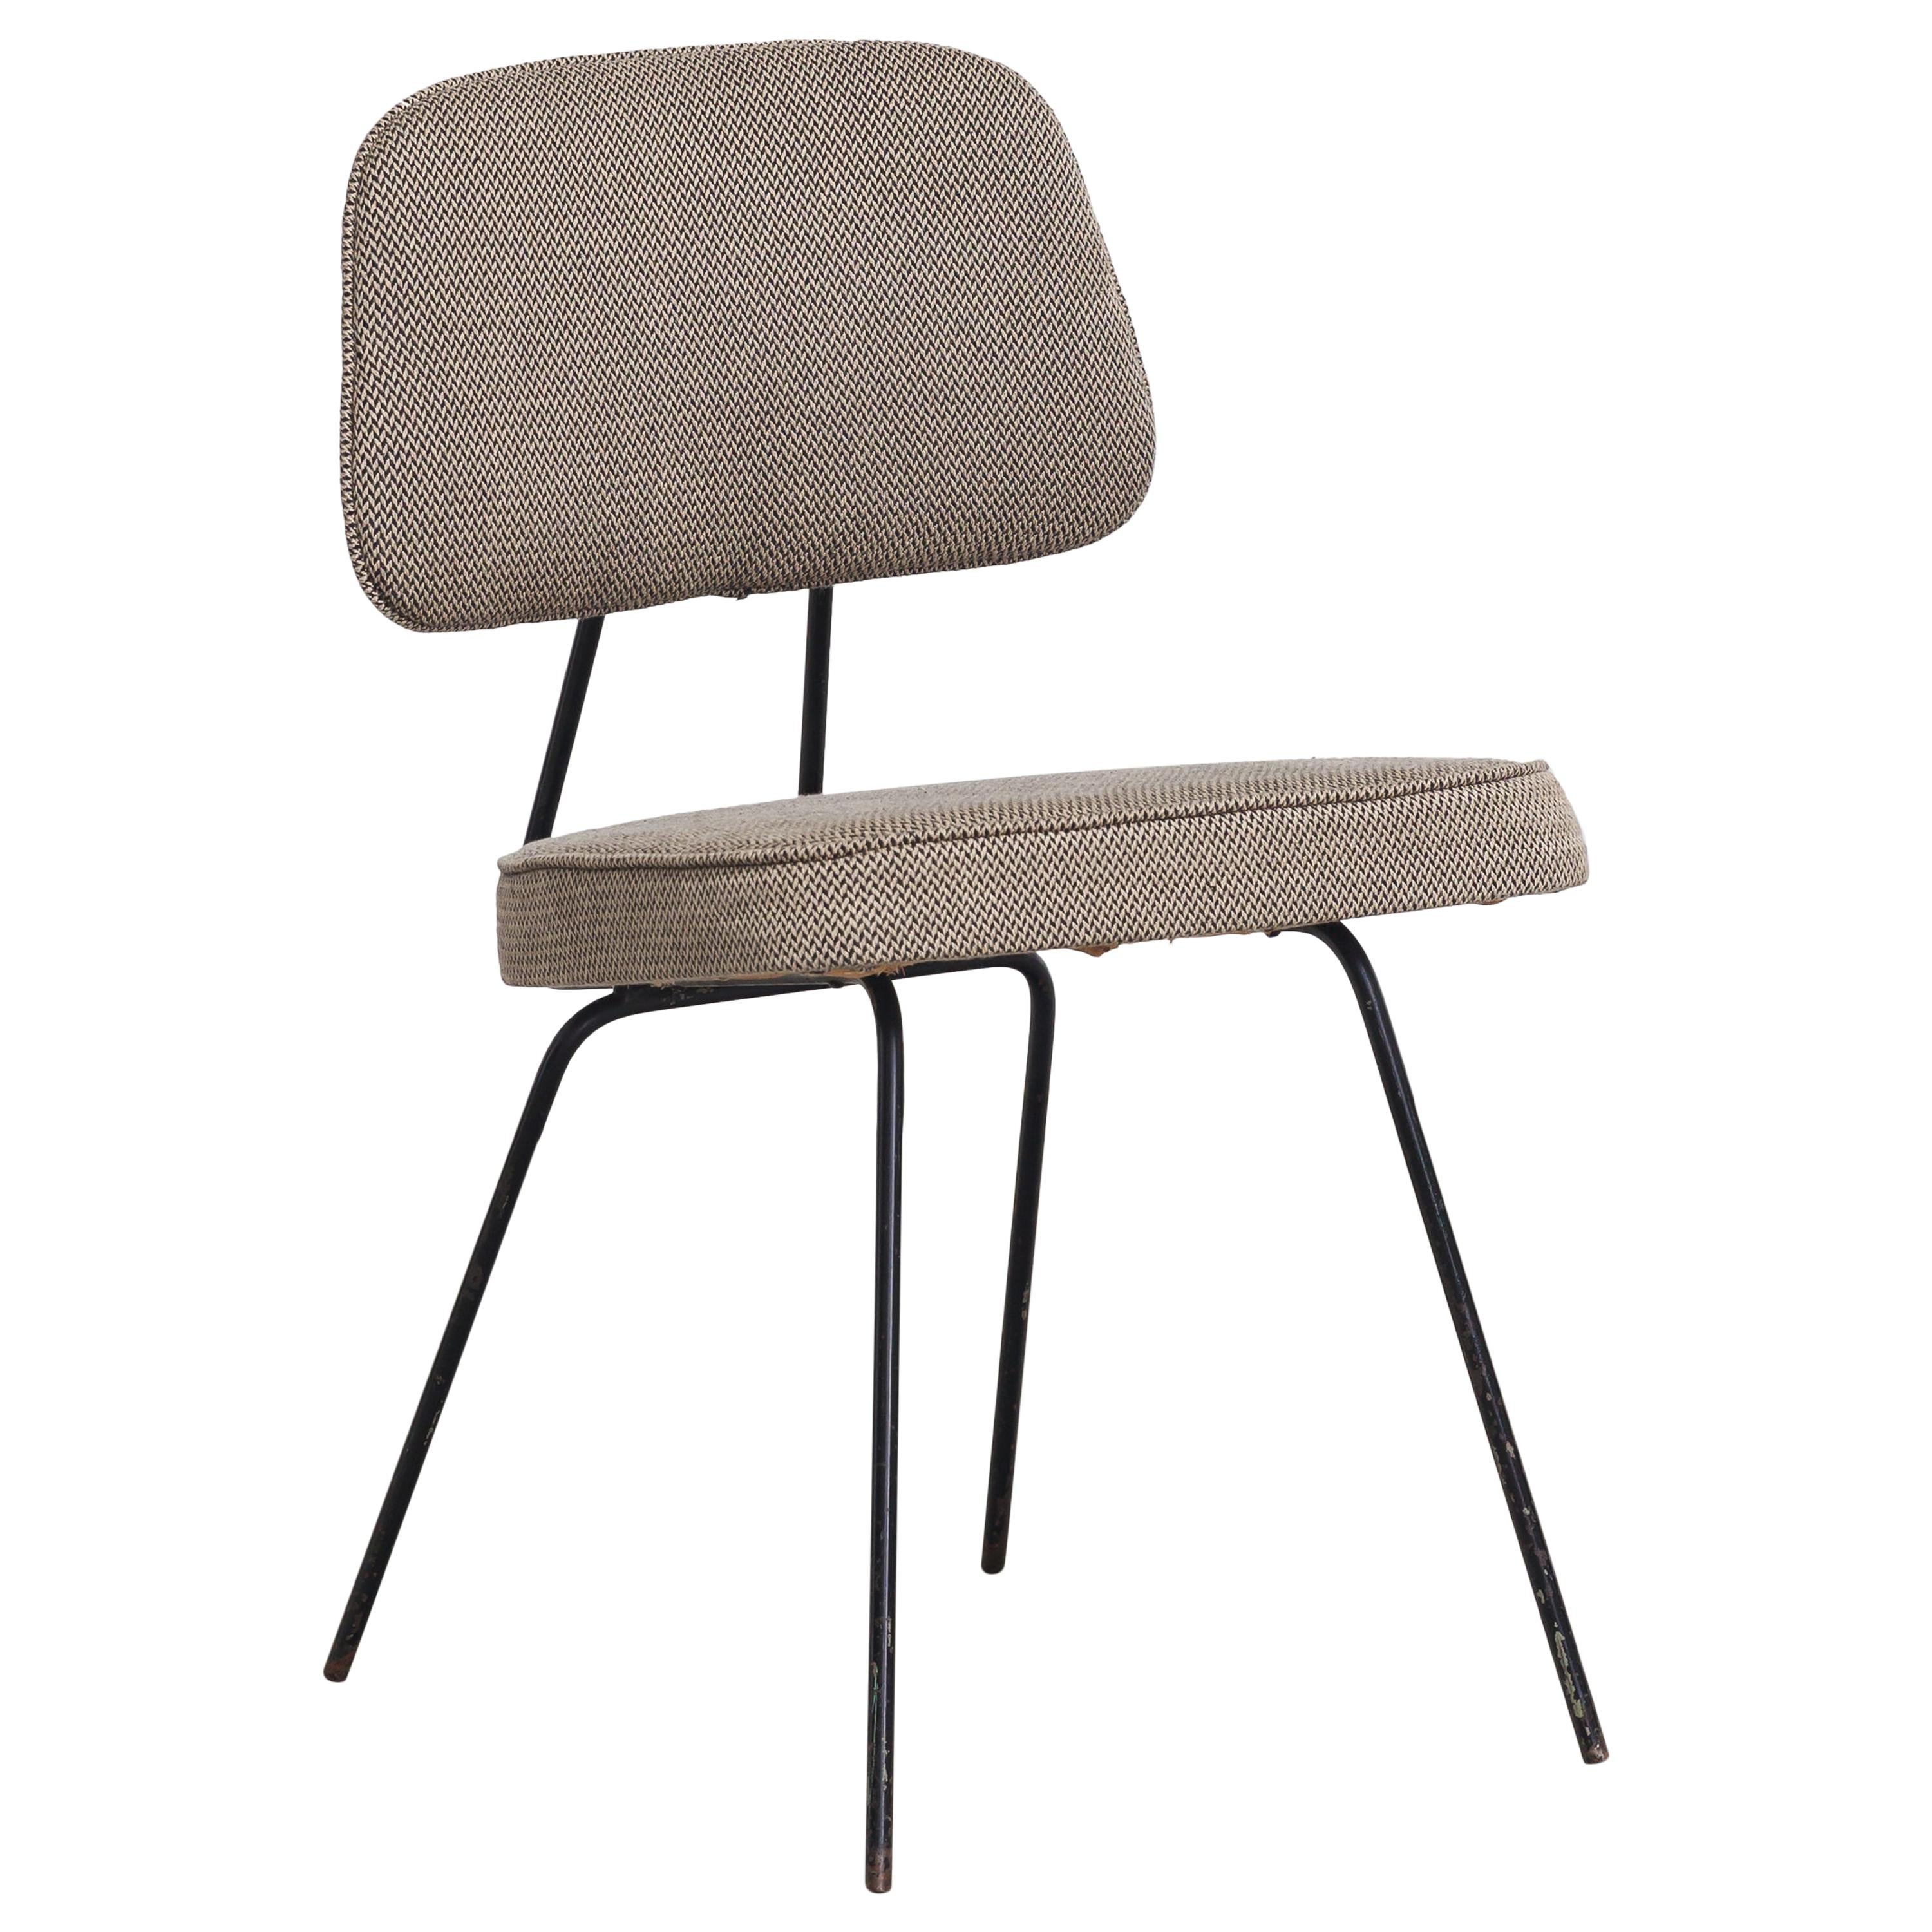 Chair by Carlo Hauner and Martin Eisler, Midcentury Brazilian Design